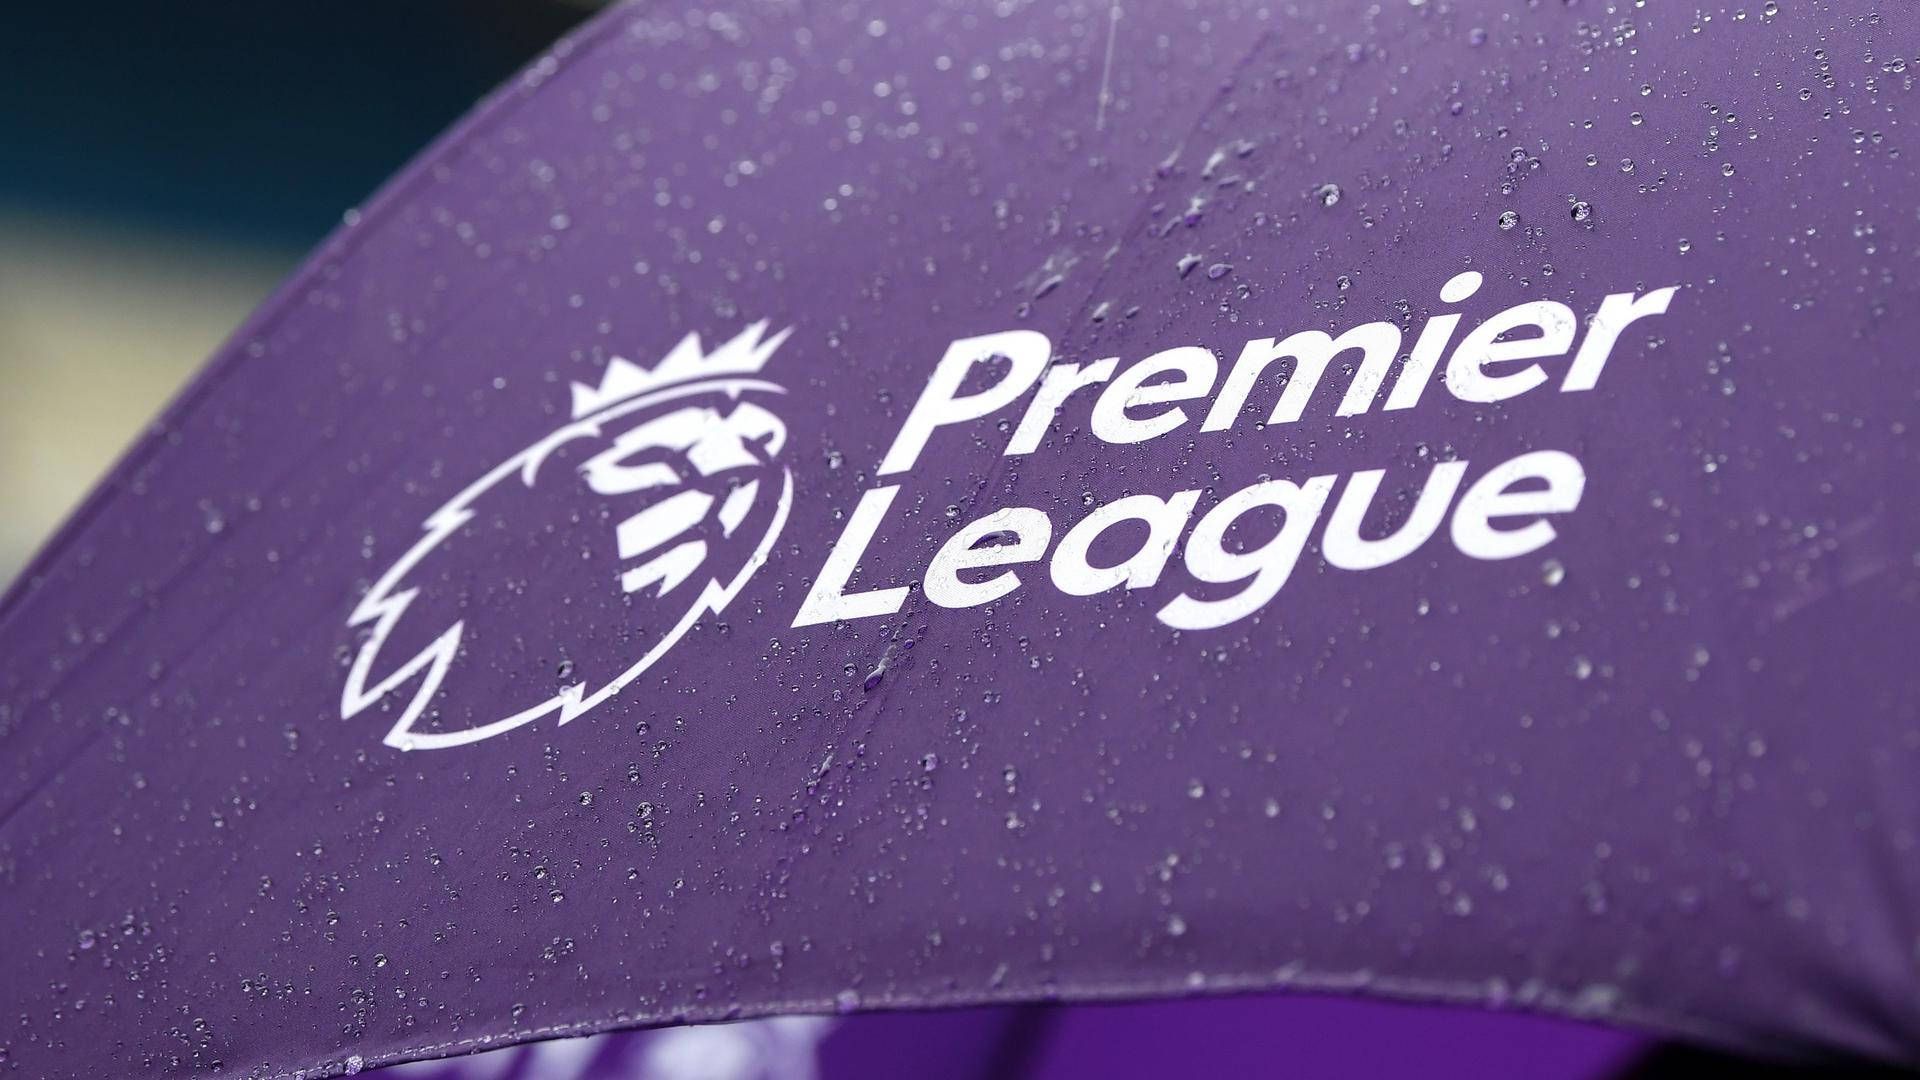 Premier League On Umbrella Background